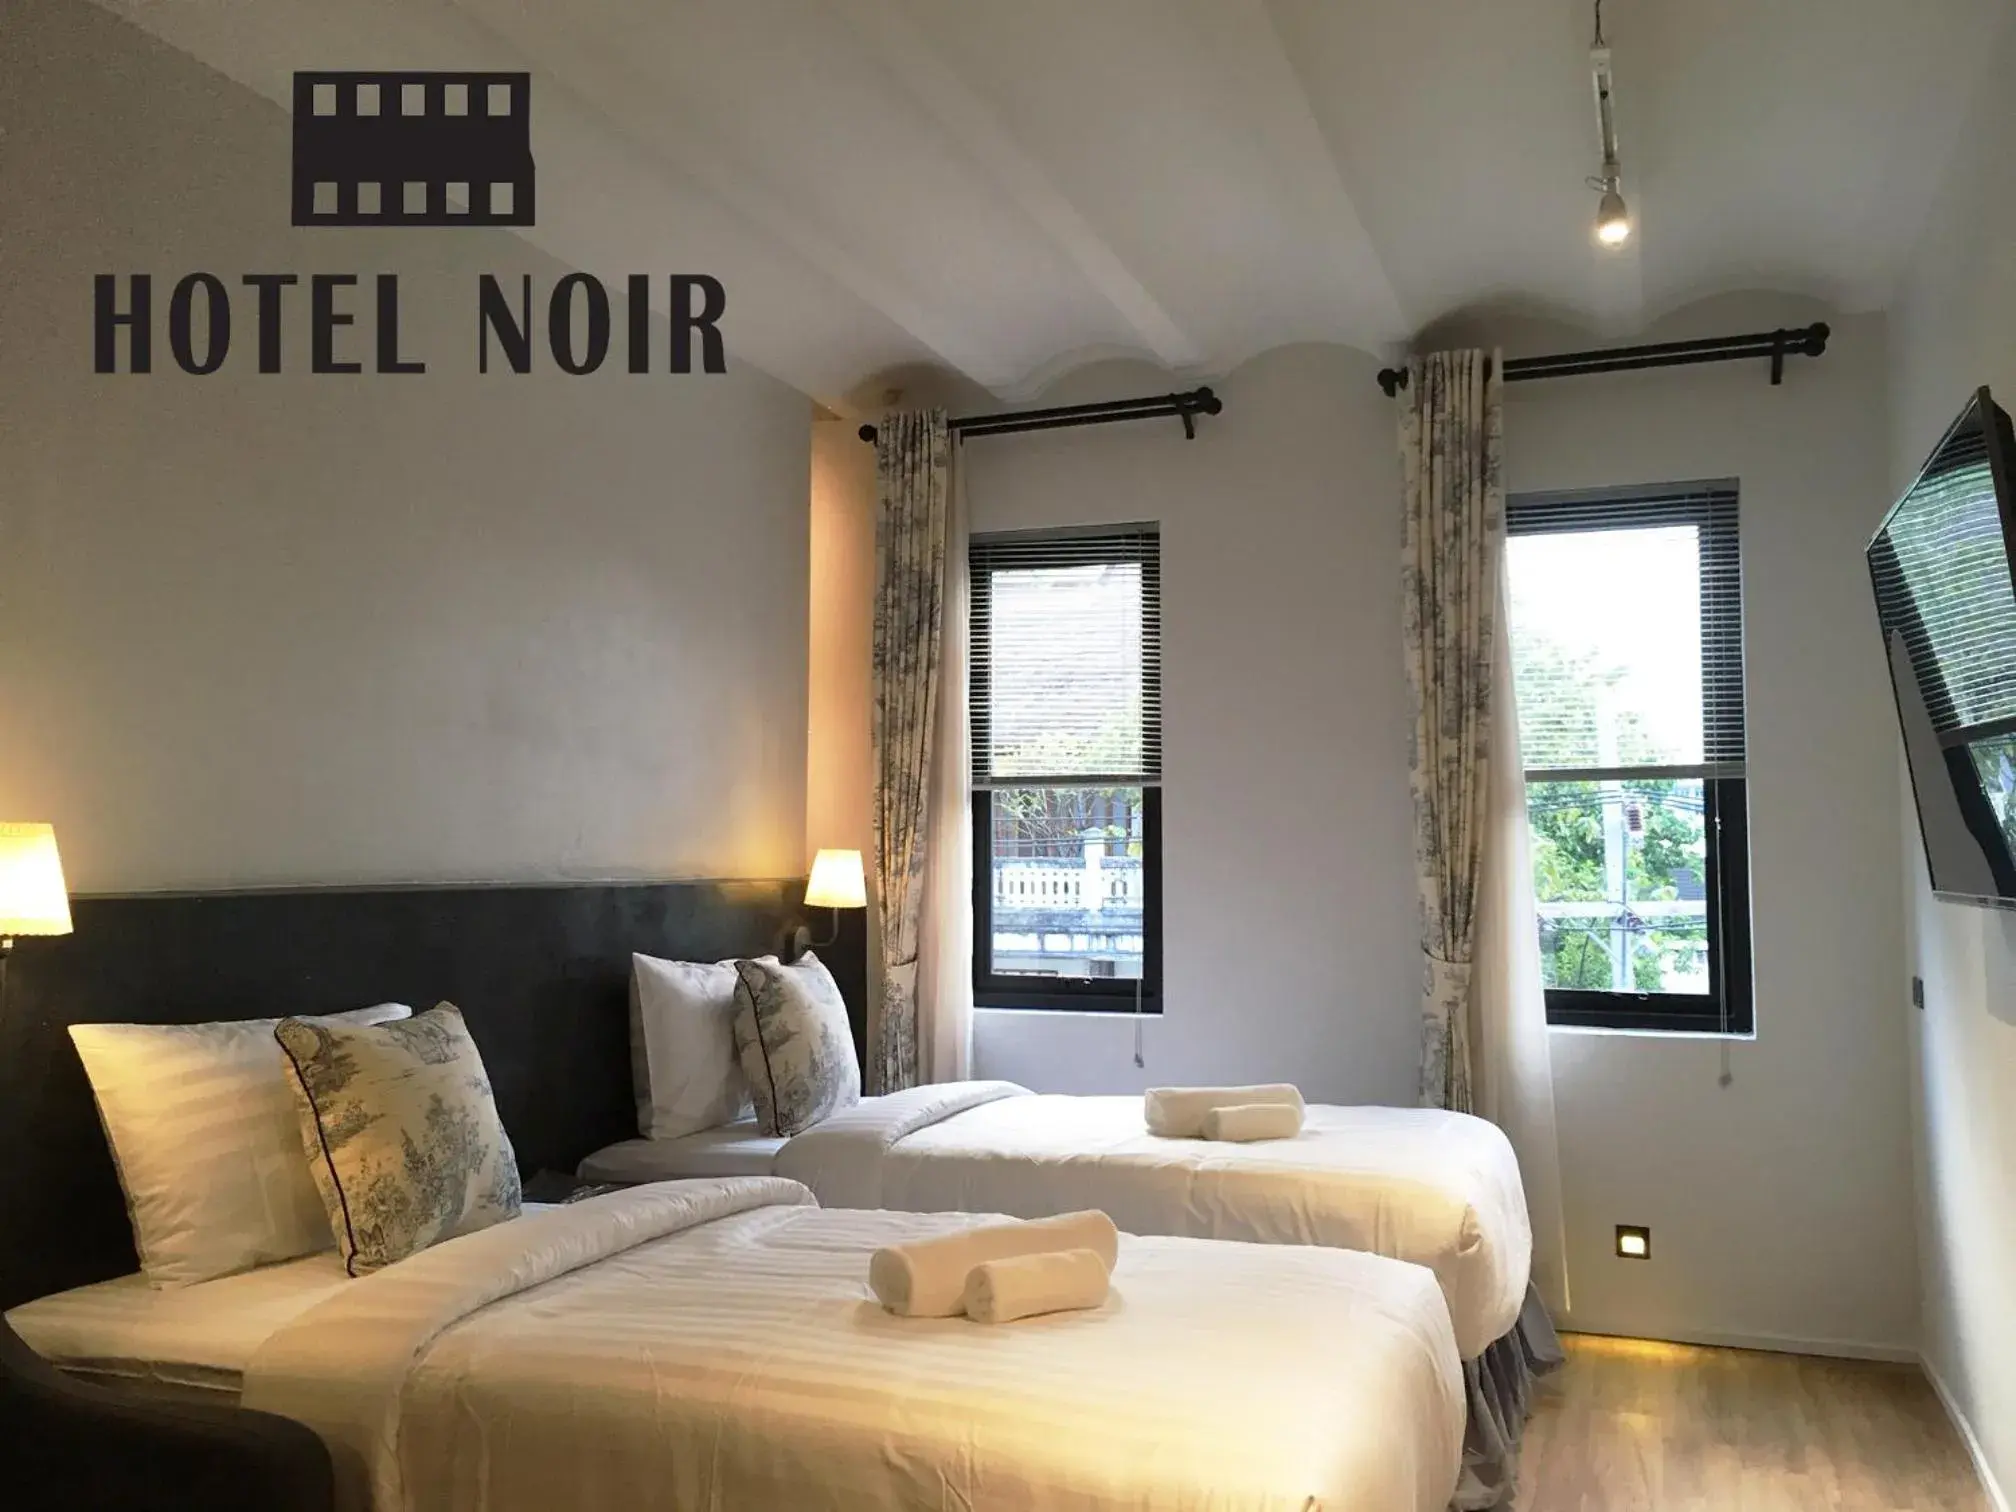 Bed in Hotel Noir